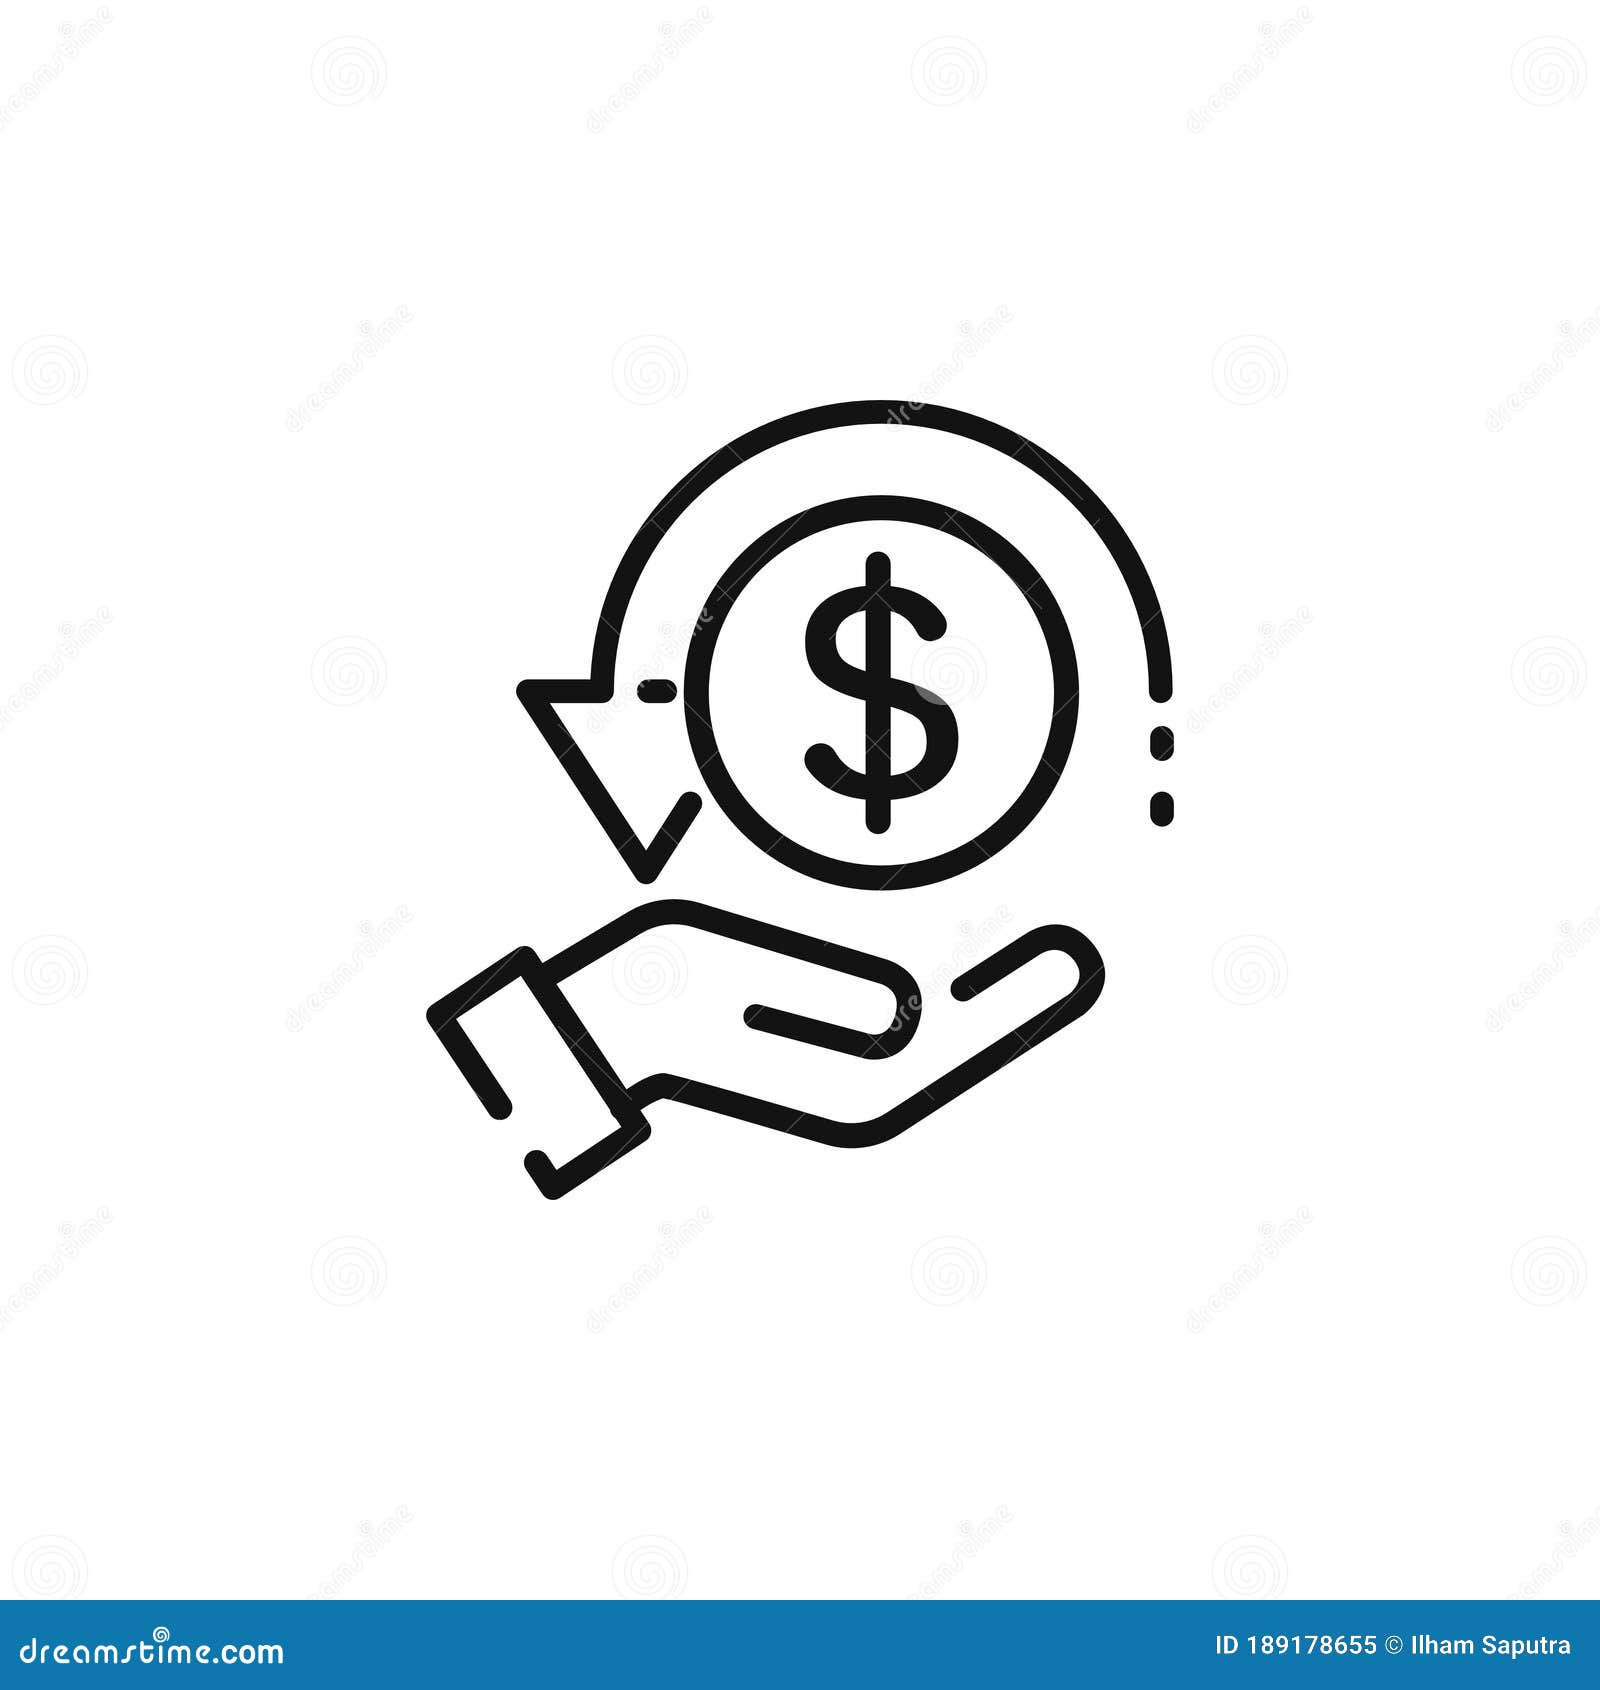 cashback-icon-return-money-cash-back-rebate-icon-vector-illustration